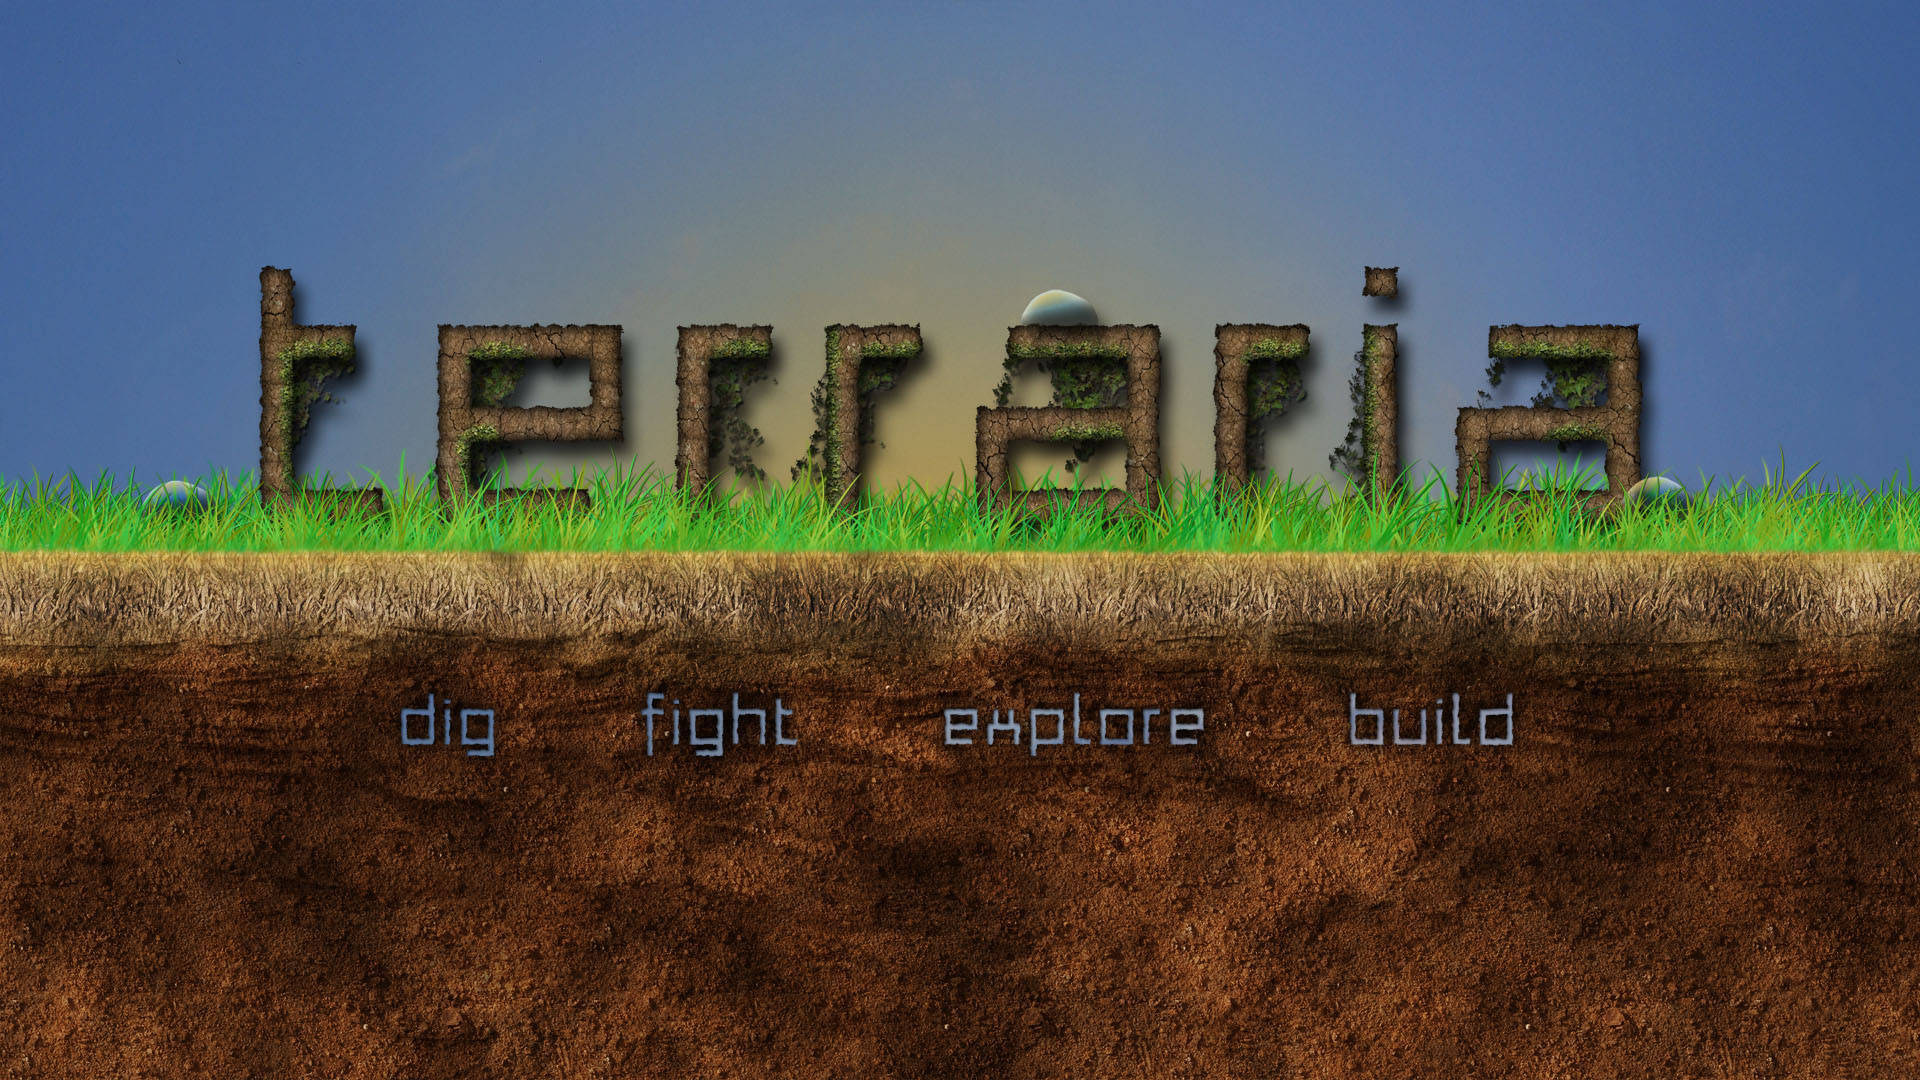 Terraria Dig Fight Explore Build Background